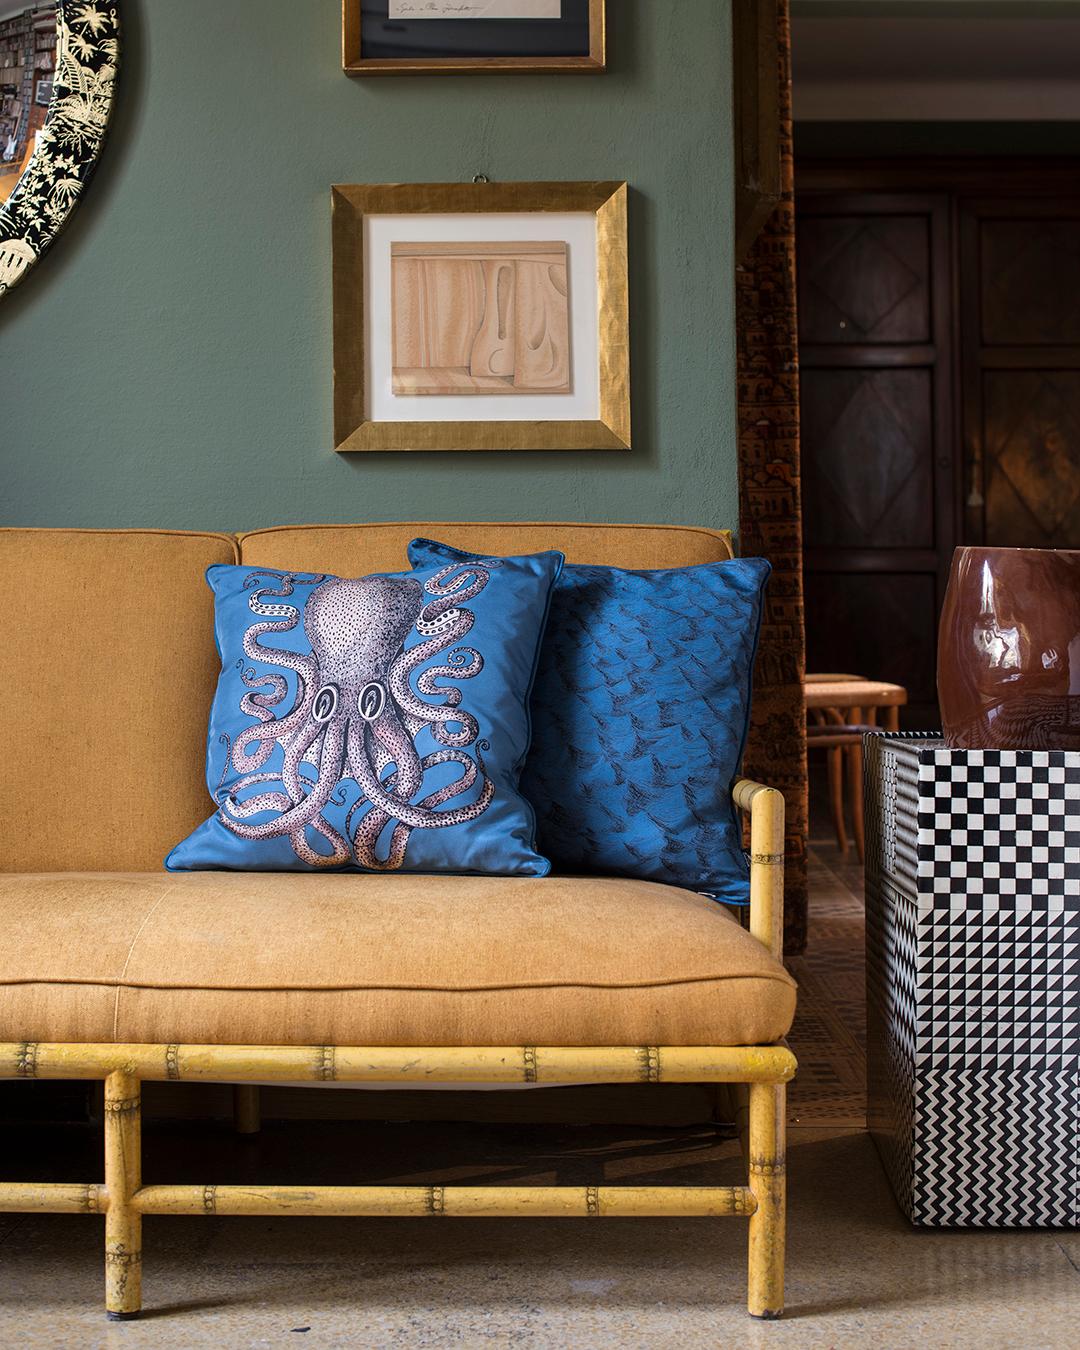 octopus cushions